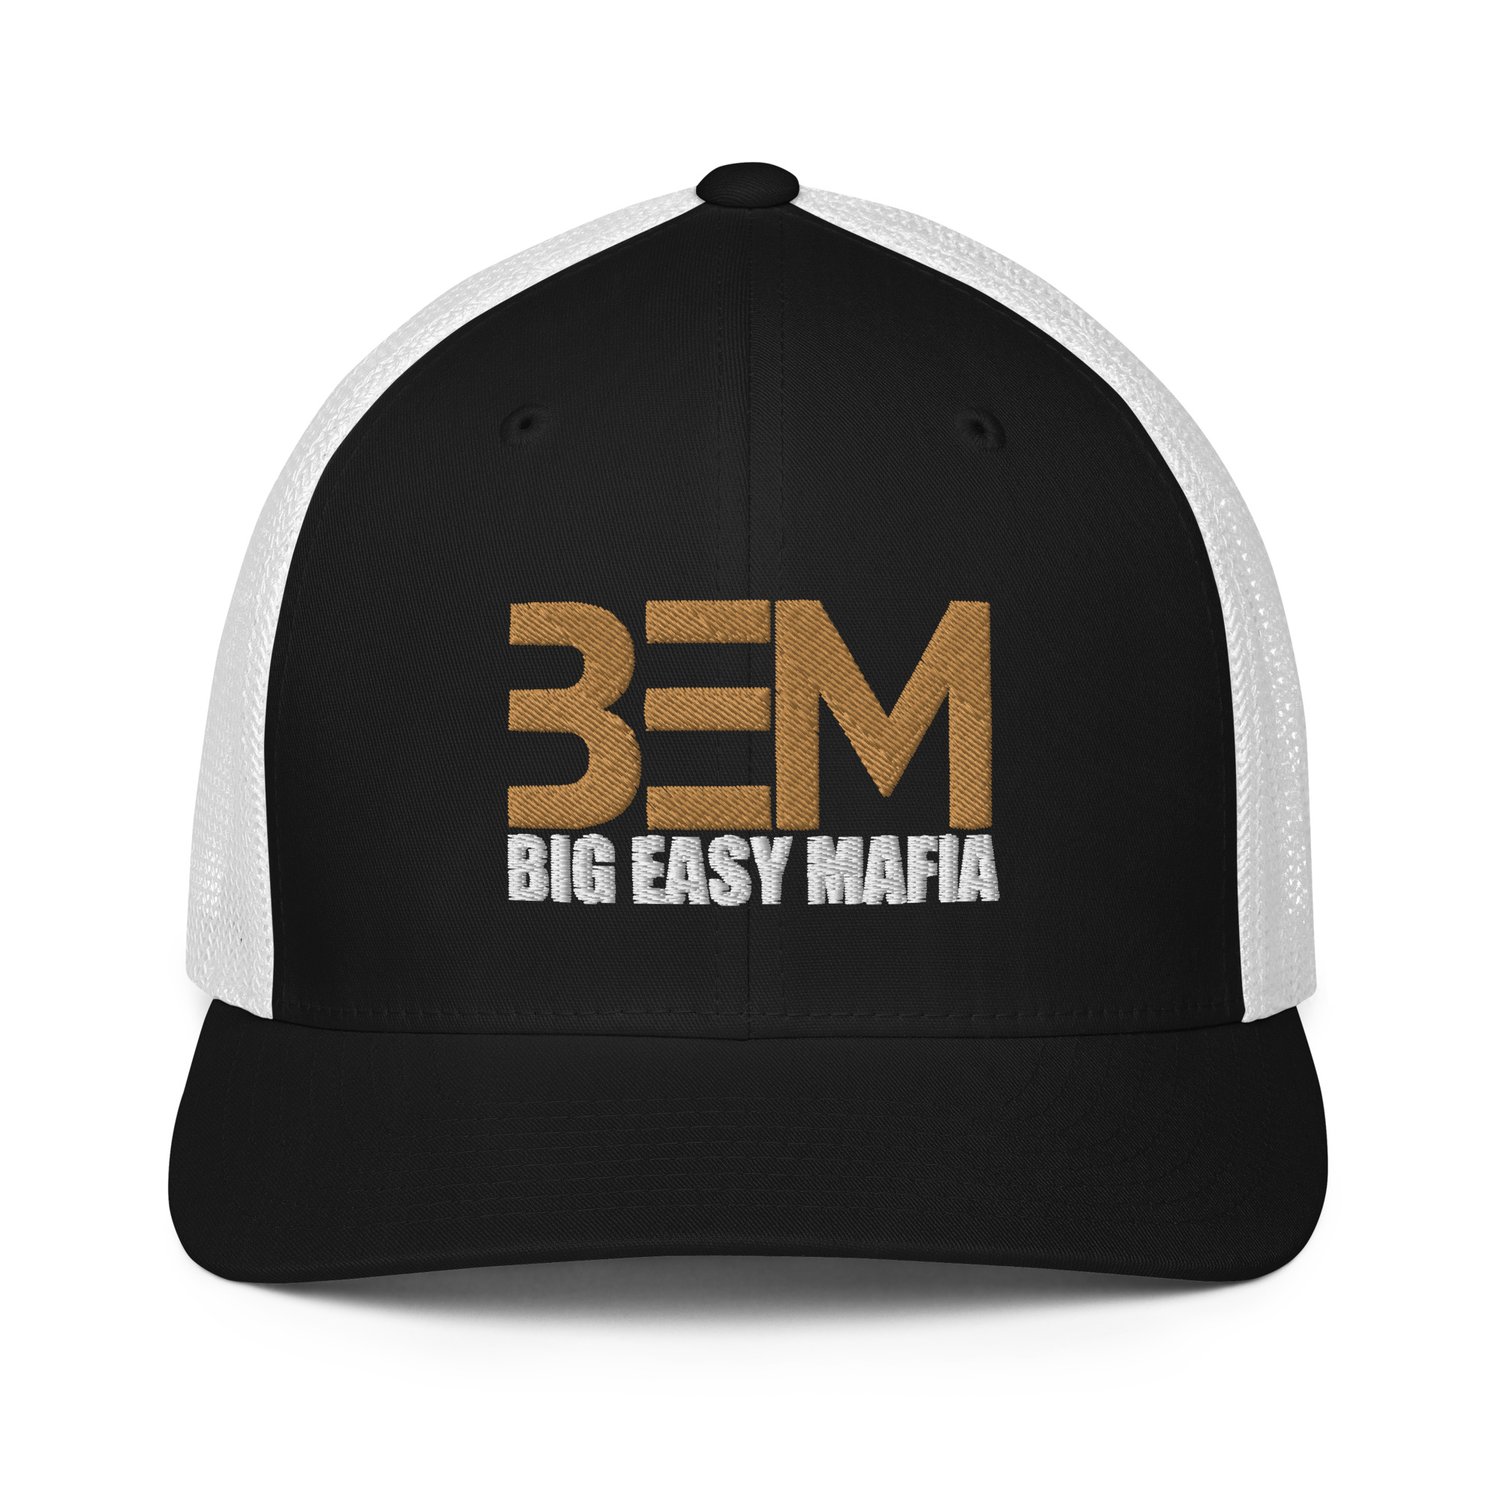 Image of BEM (Big Easy Mafia) Mesh back trucker cap